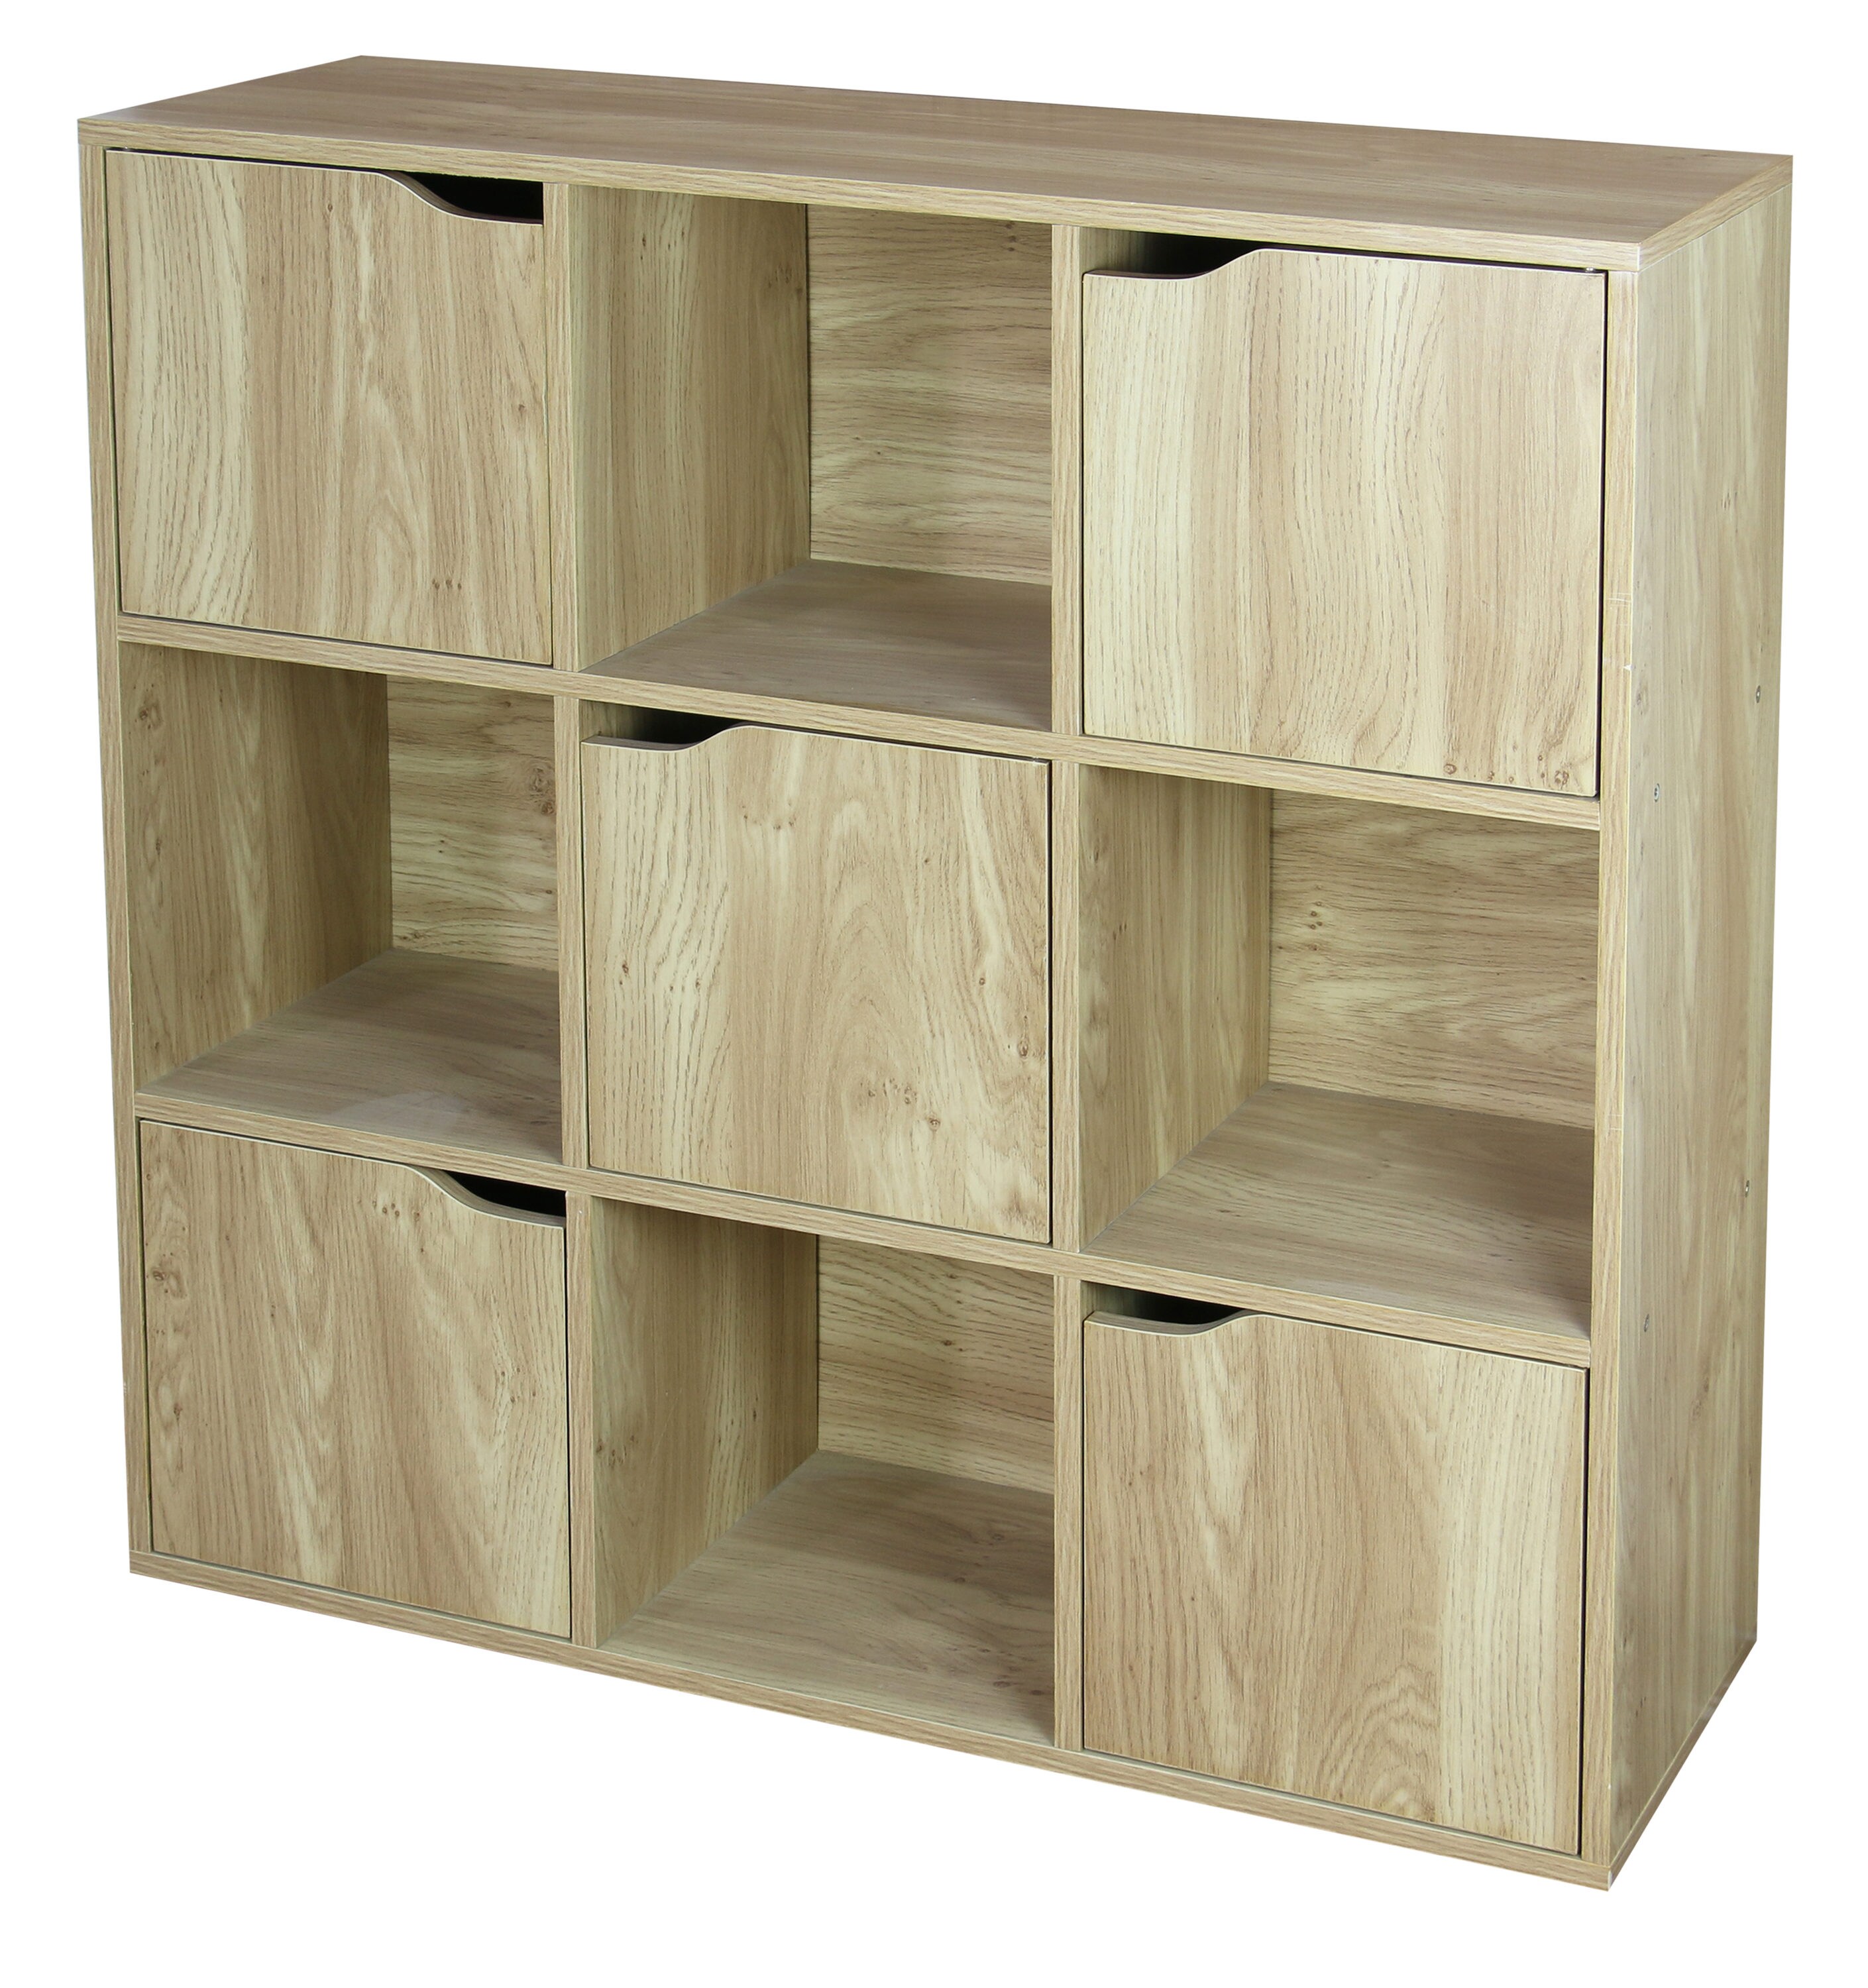 9-CUBE ORGANIZER Storage Shelf Rack Cabinet Closet Shelves Living Room Furniture 